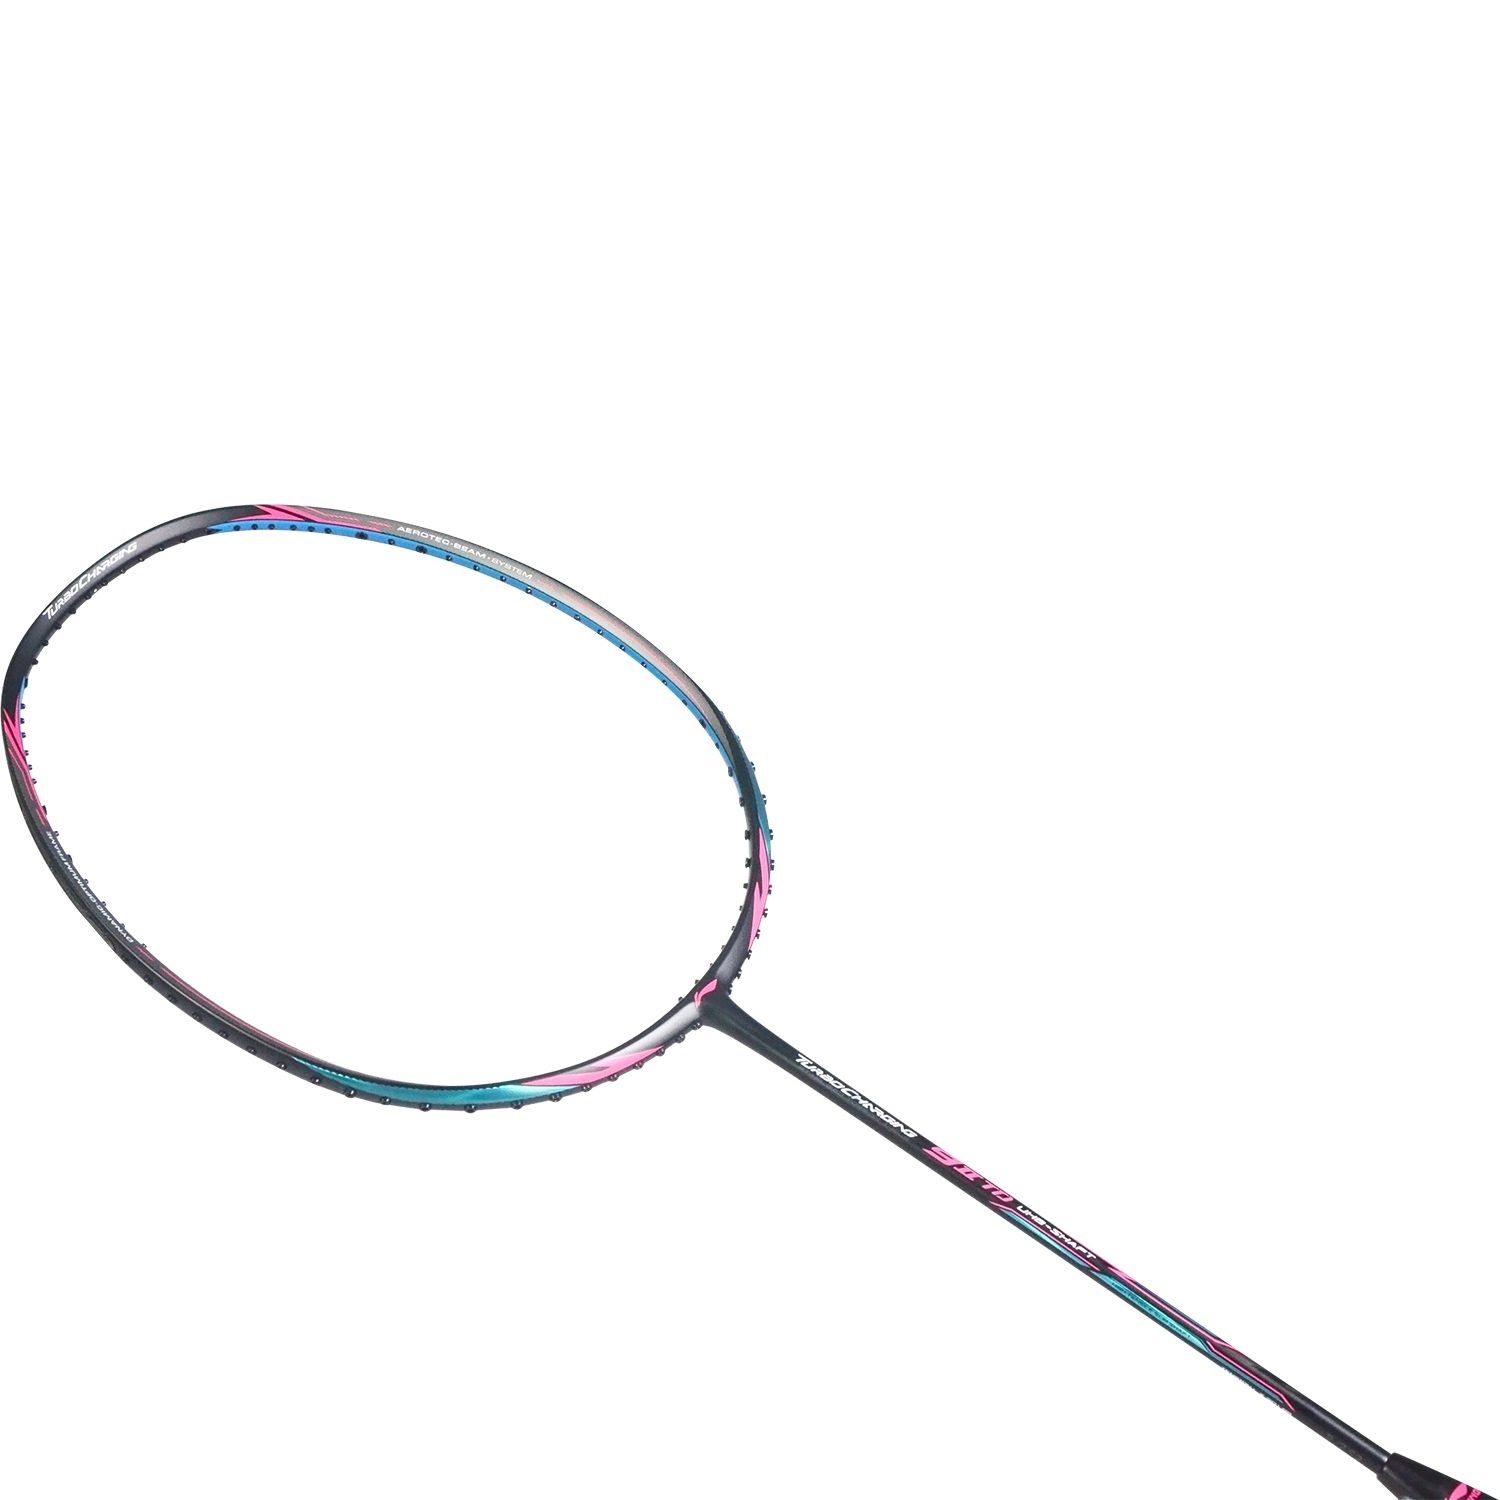 Li-Ning 2018 Turbo Charging 9II TD Lining Badminton Racket